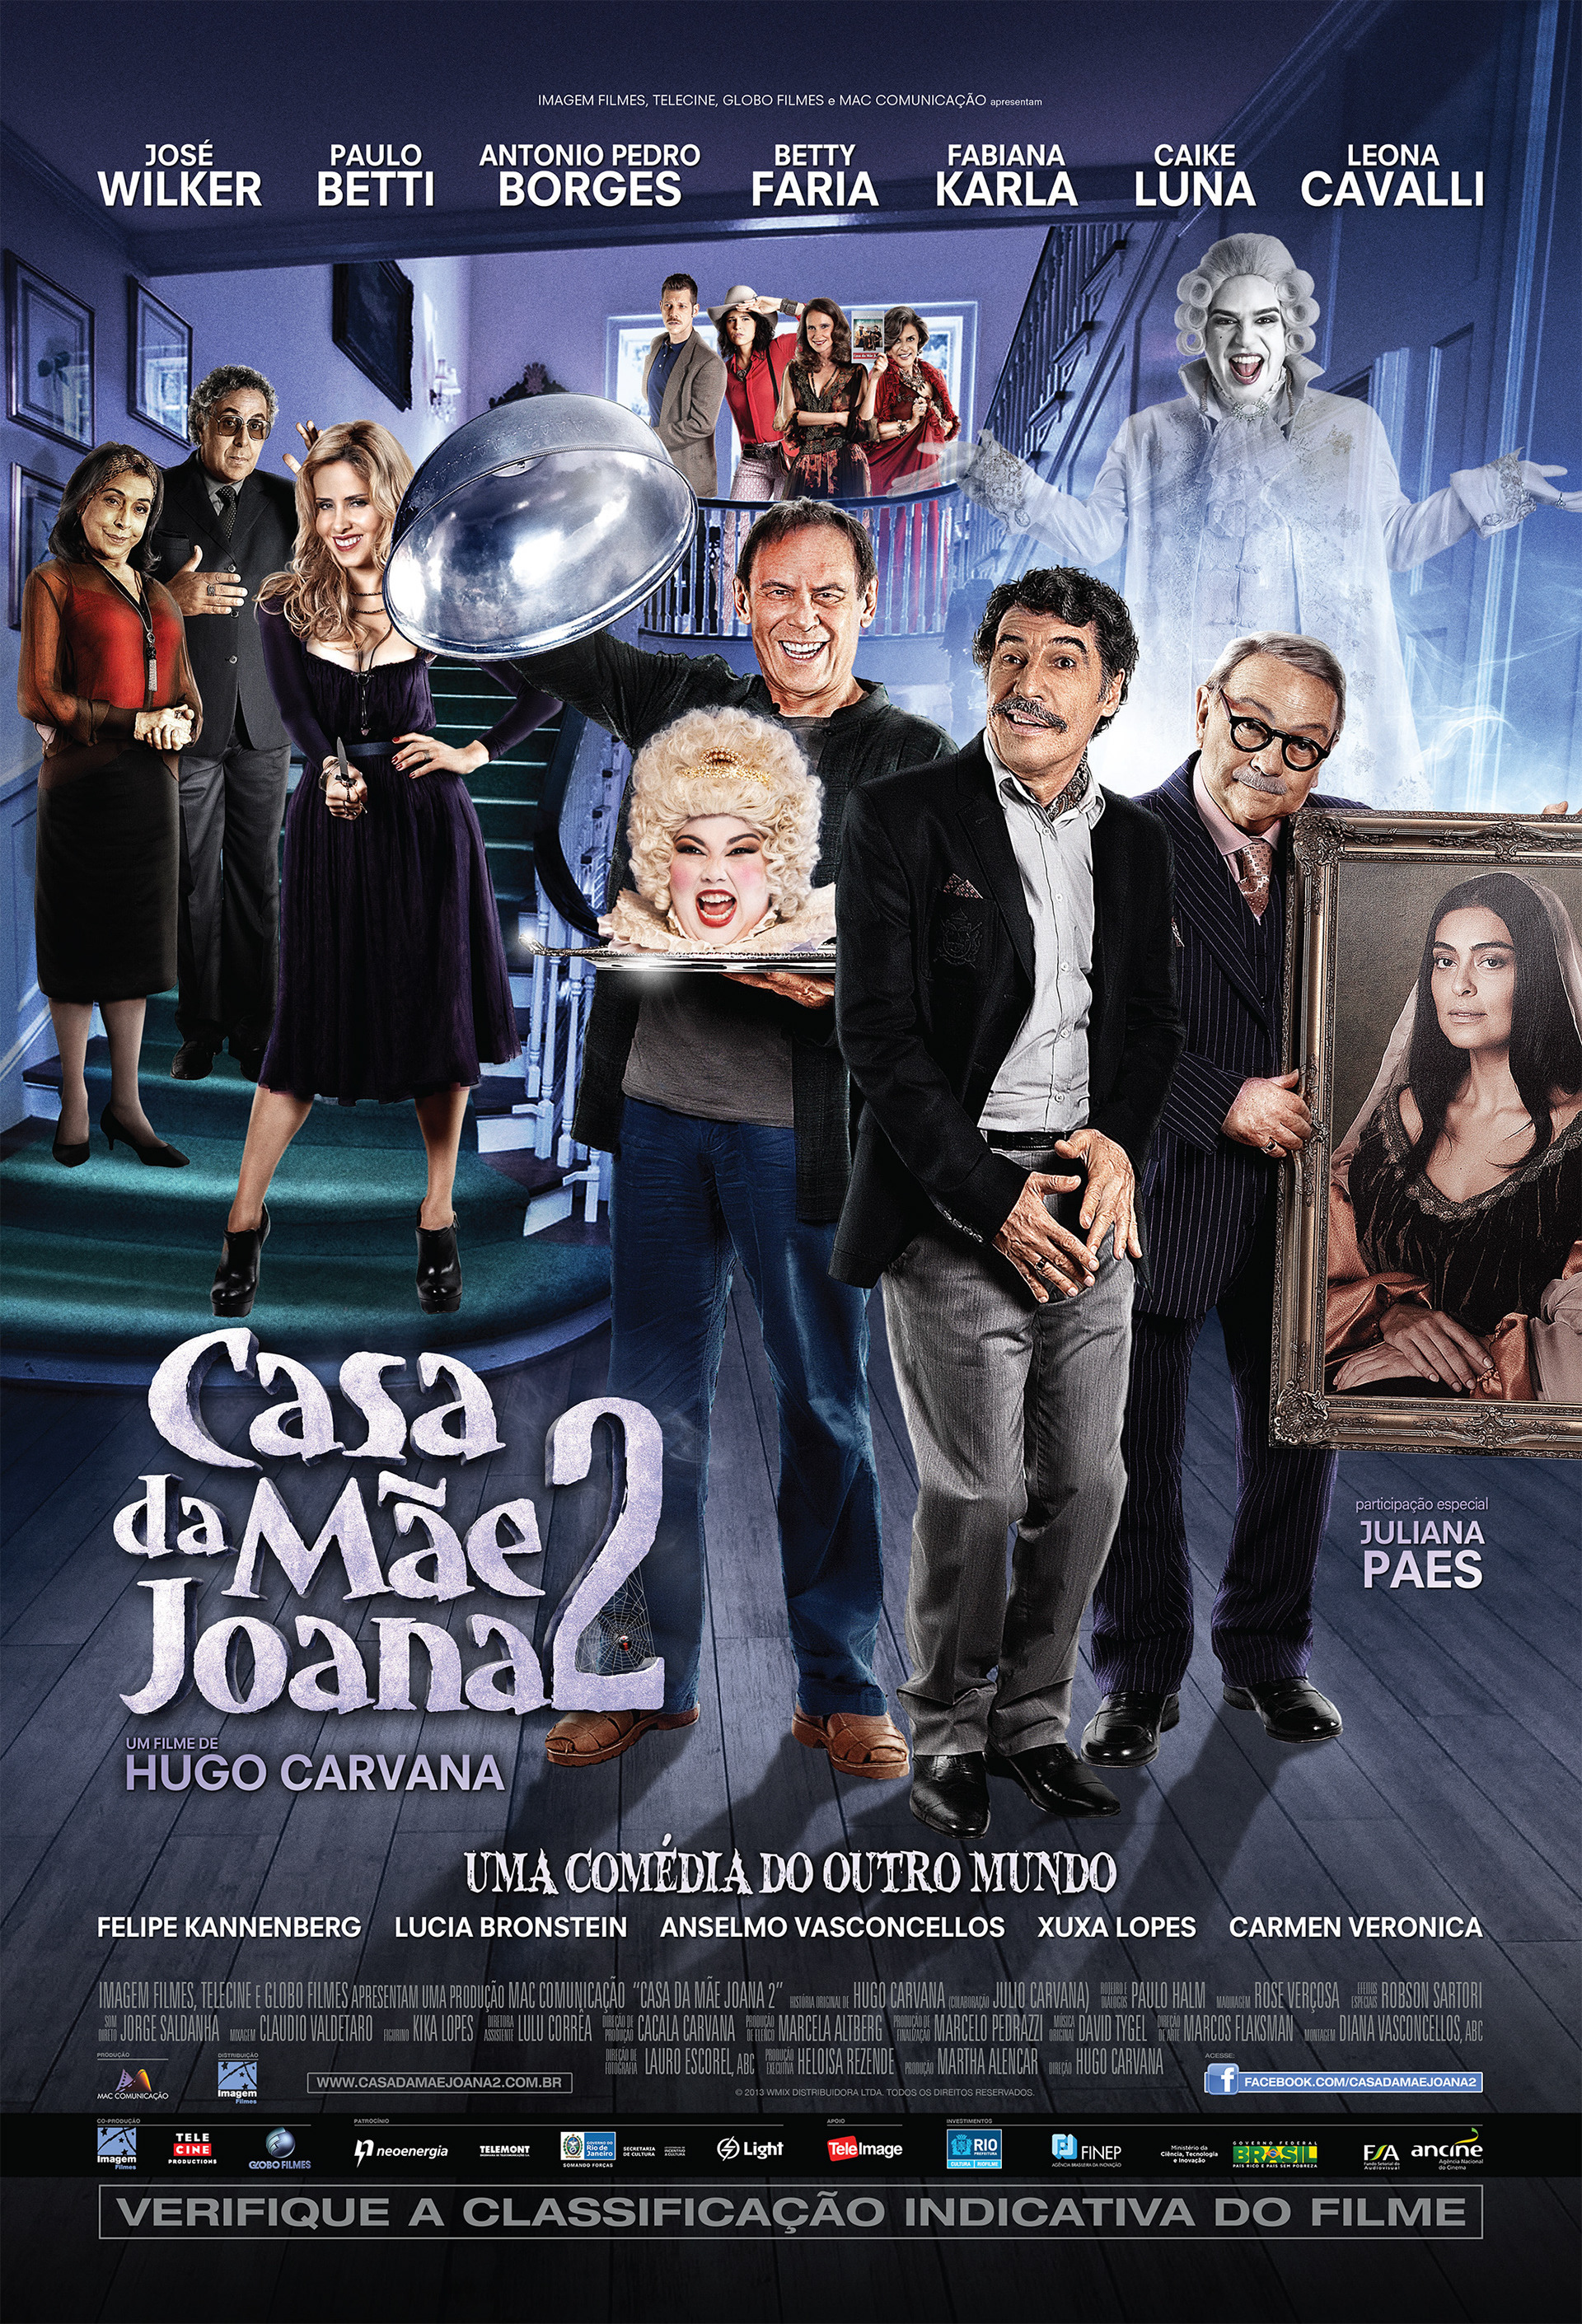 Mega Sized Movie Poster Image for Casa da Mãe Joana 2 